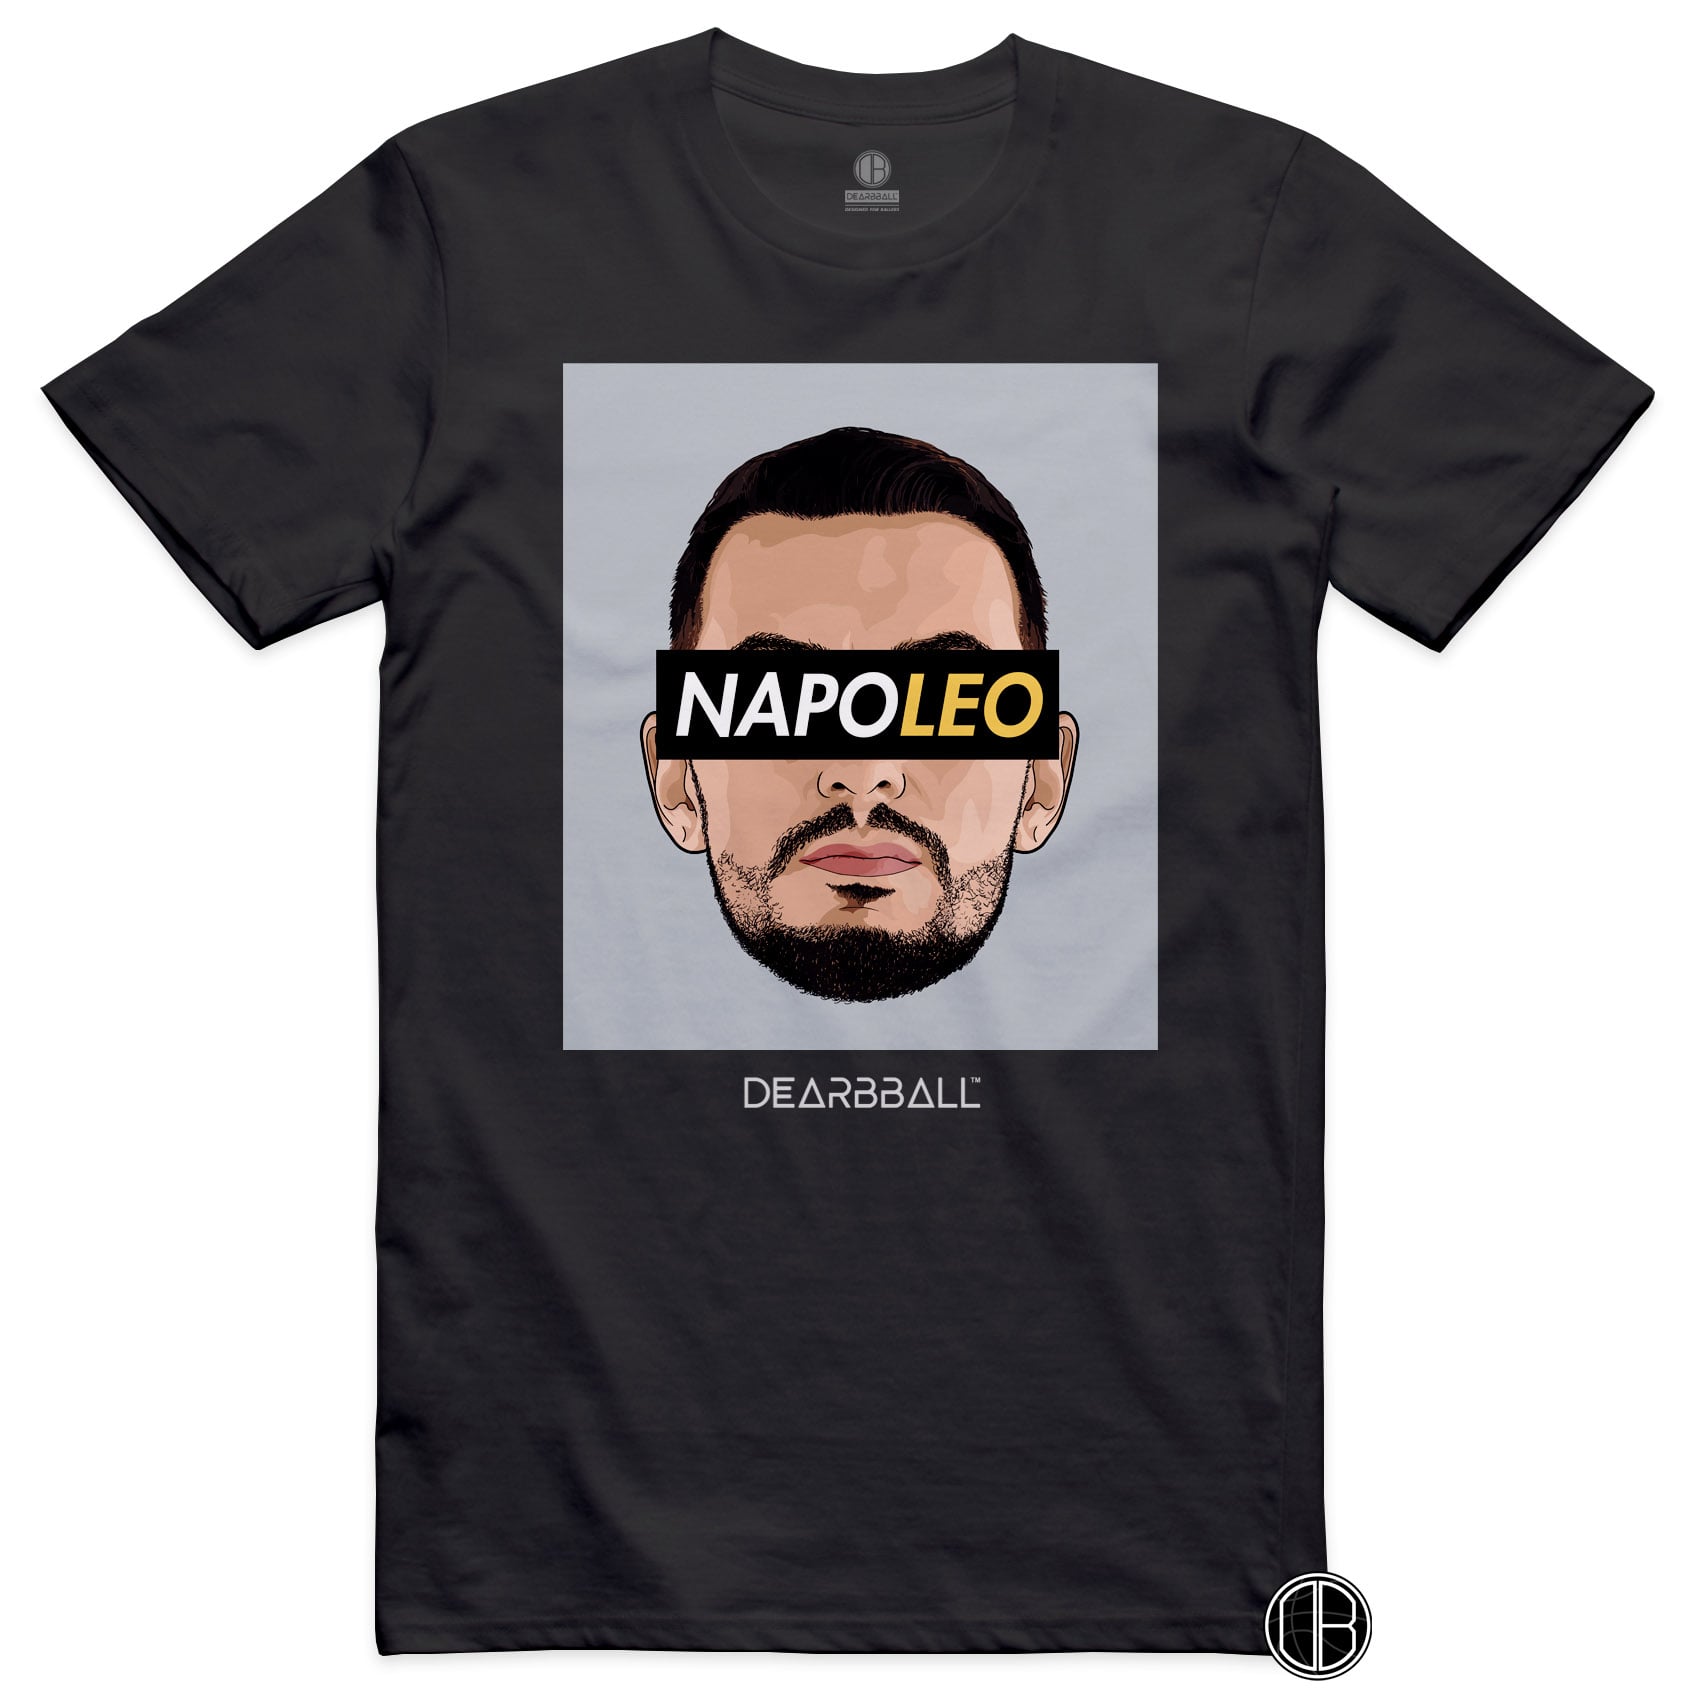 DearBBall T-Shirt - NapoLeo Grey Edition